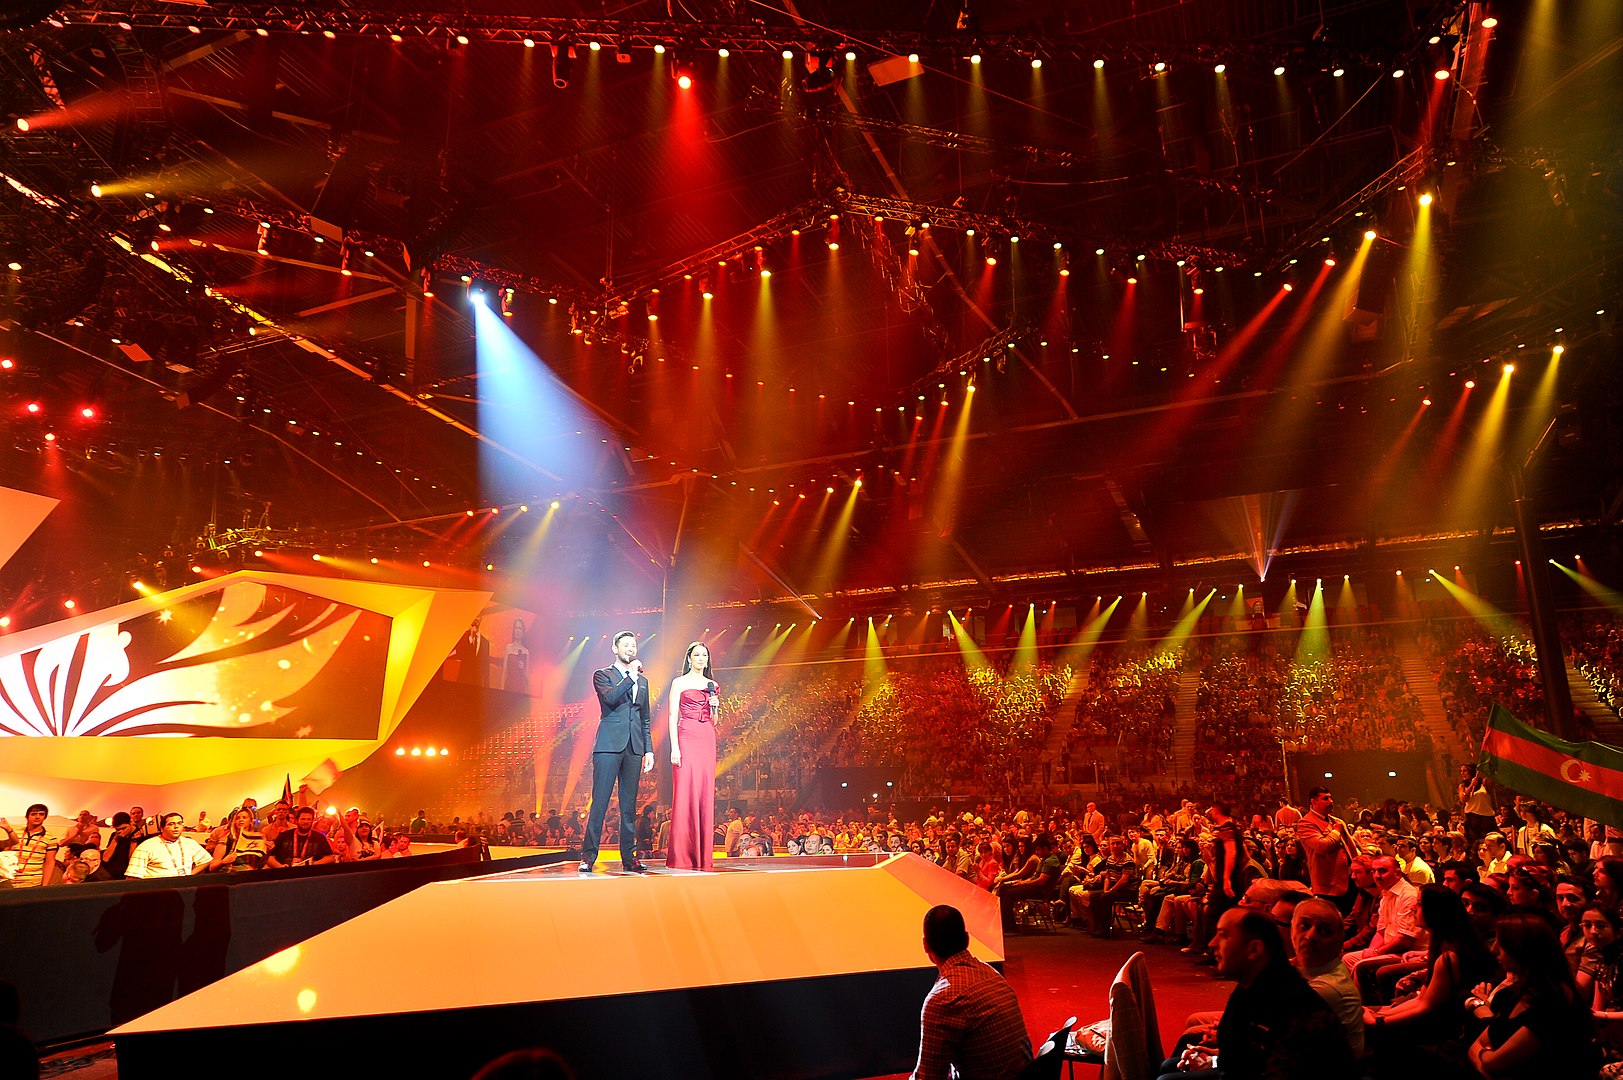 Baku Crystal Hall during the Eurovision Song Contest 2012 (Image by Vugarİbadov)